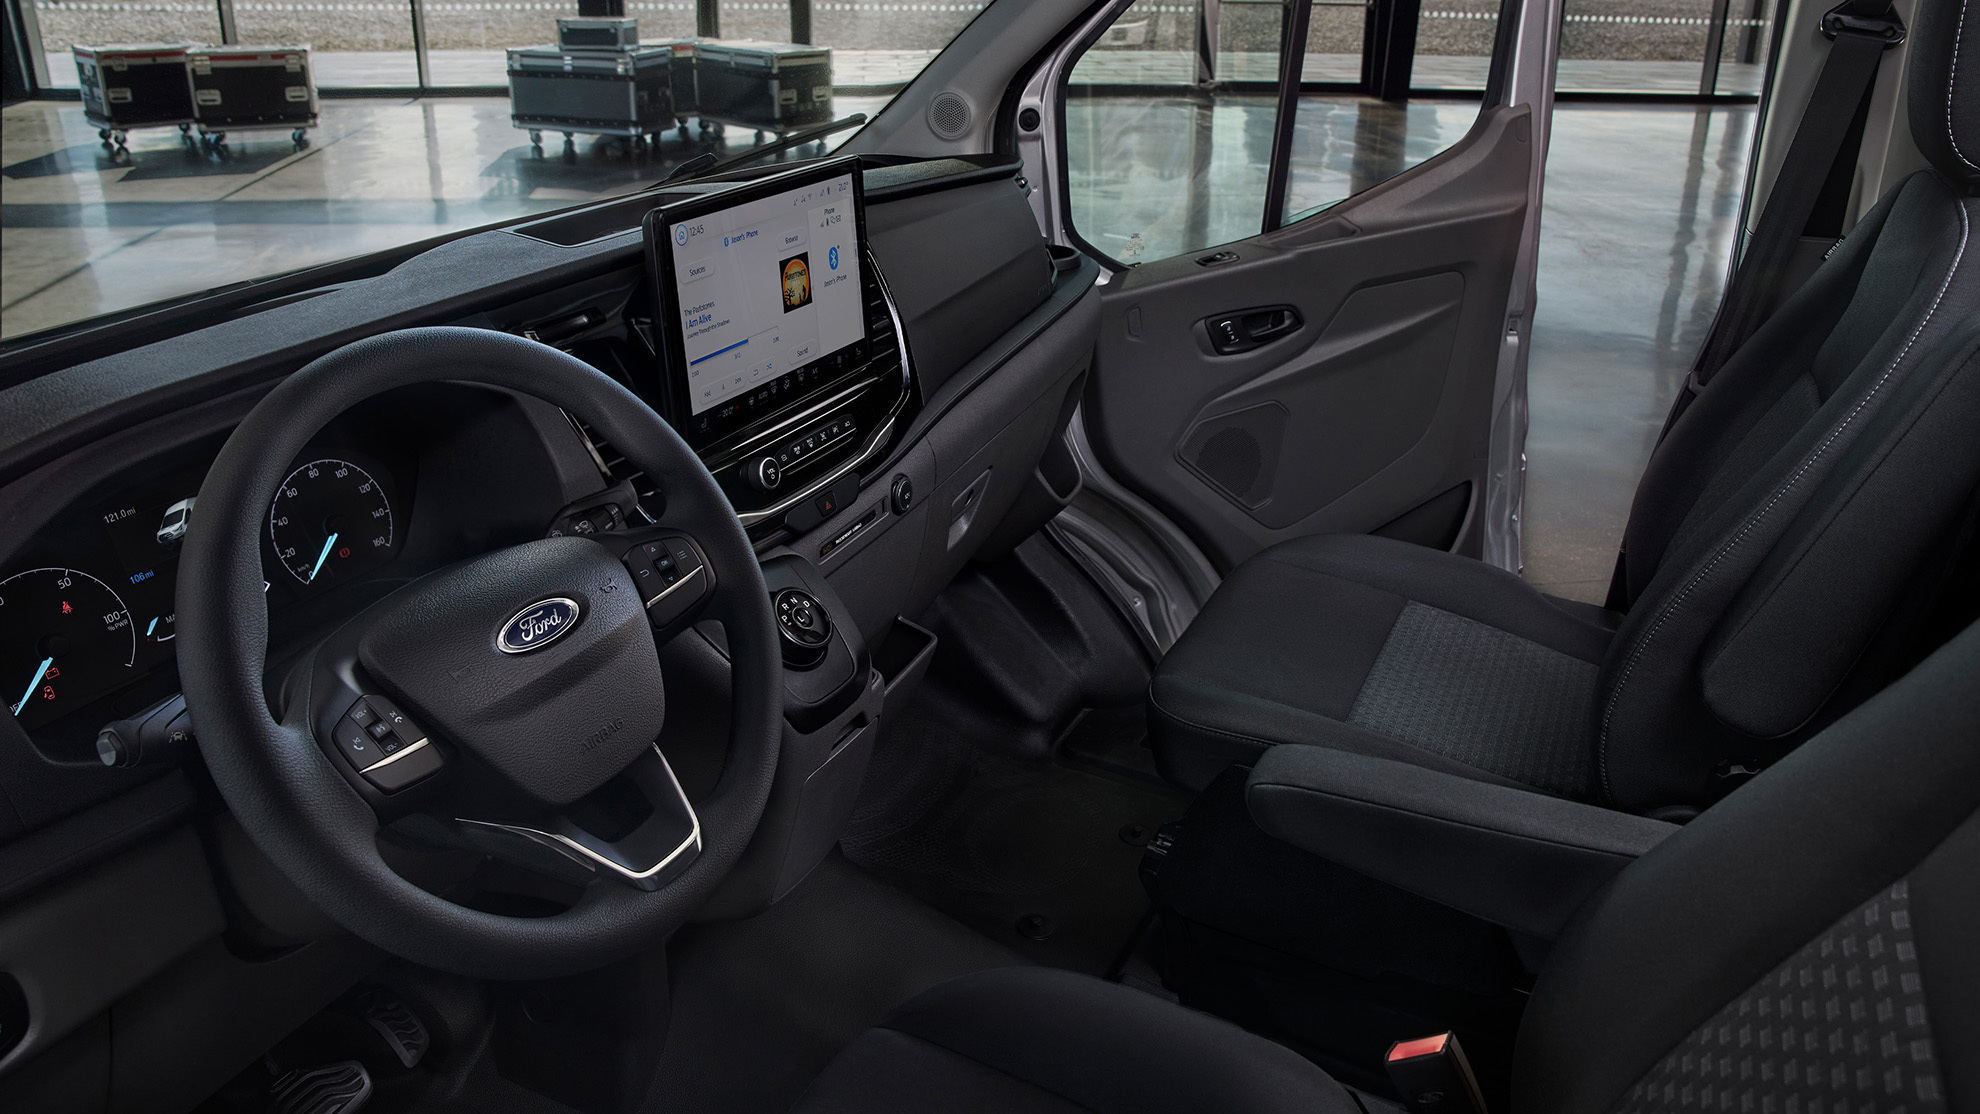 Ford E-Transit - furgoneta electrica - Ford telematics - FordLive